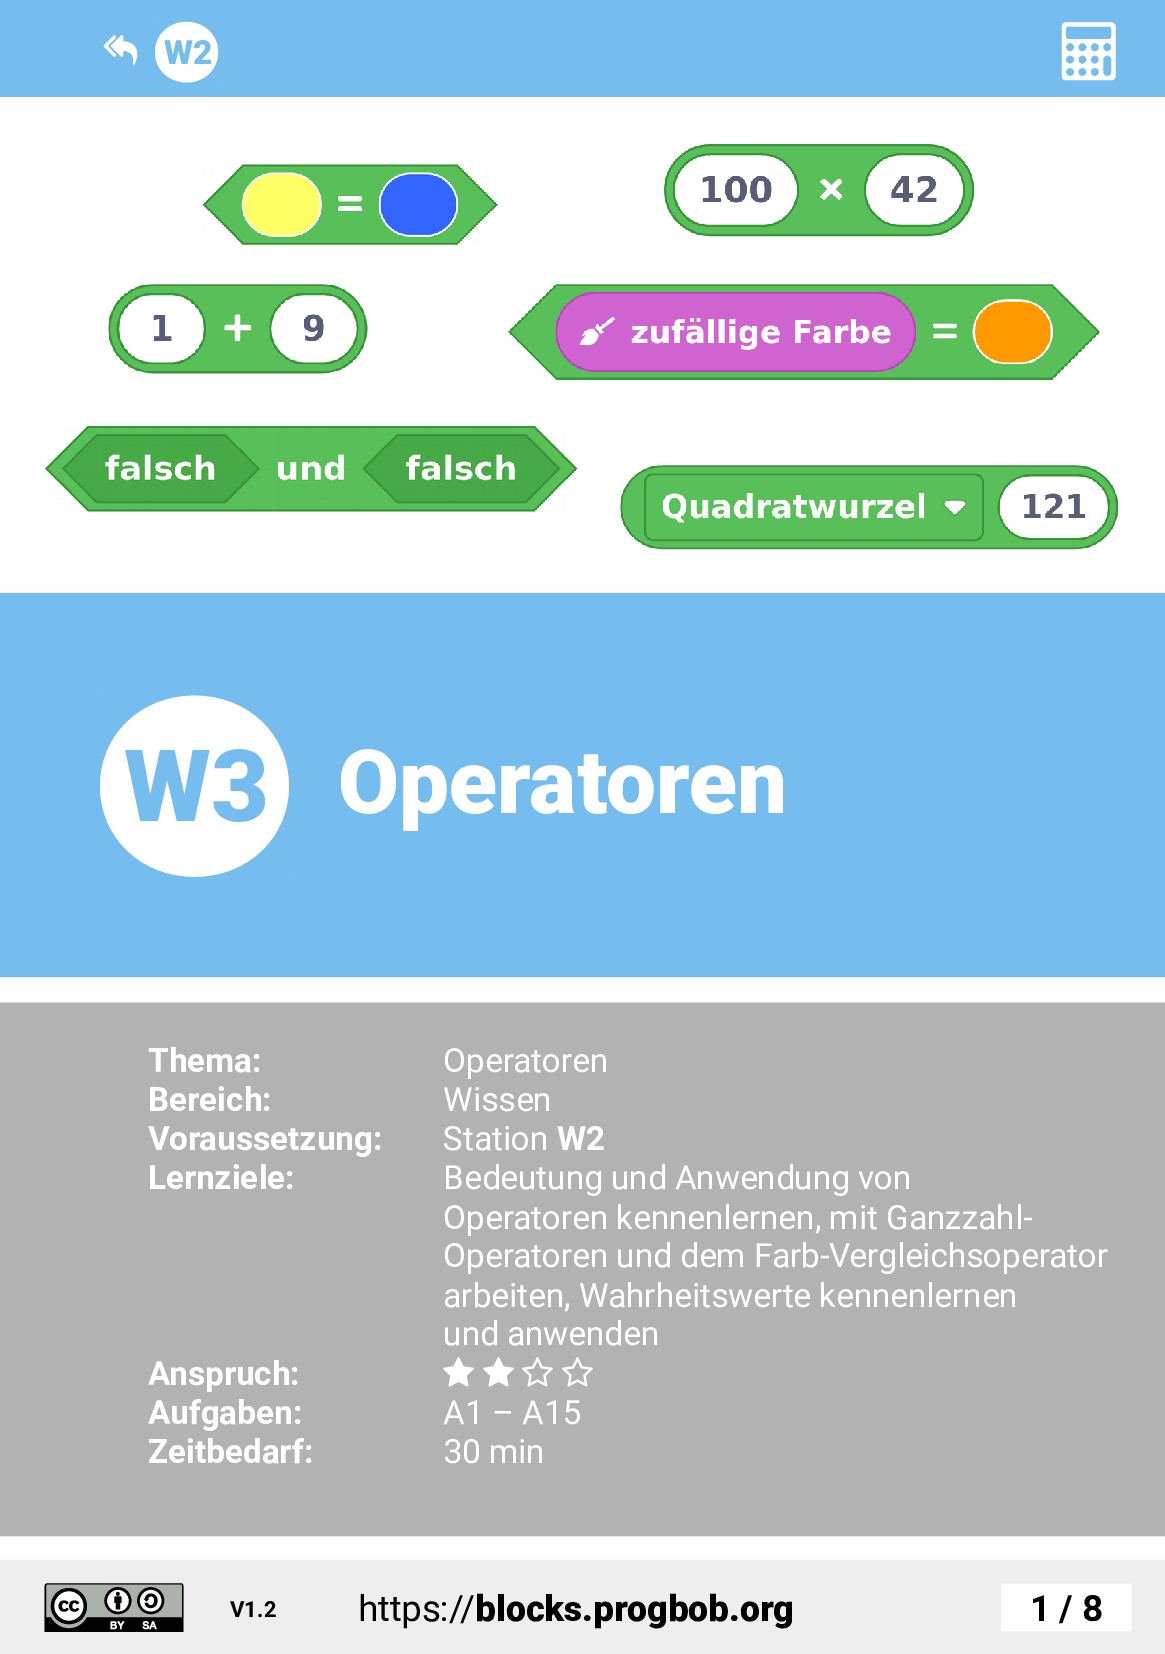 Station W3 - Operatoren - Deckblatt